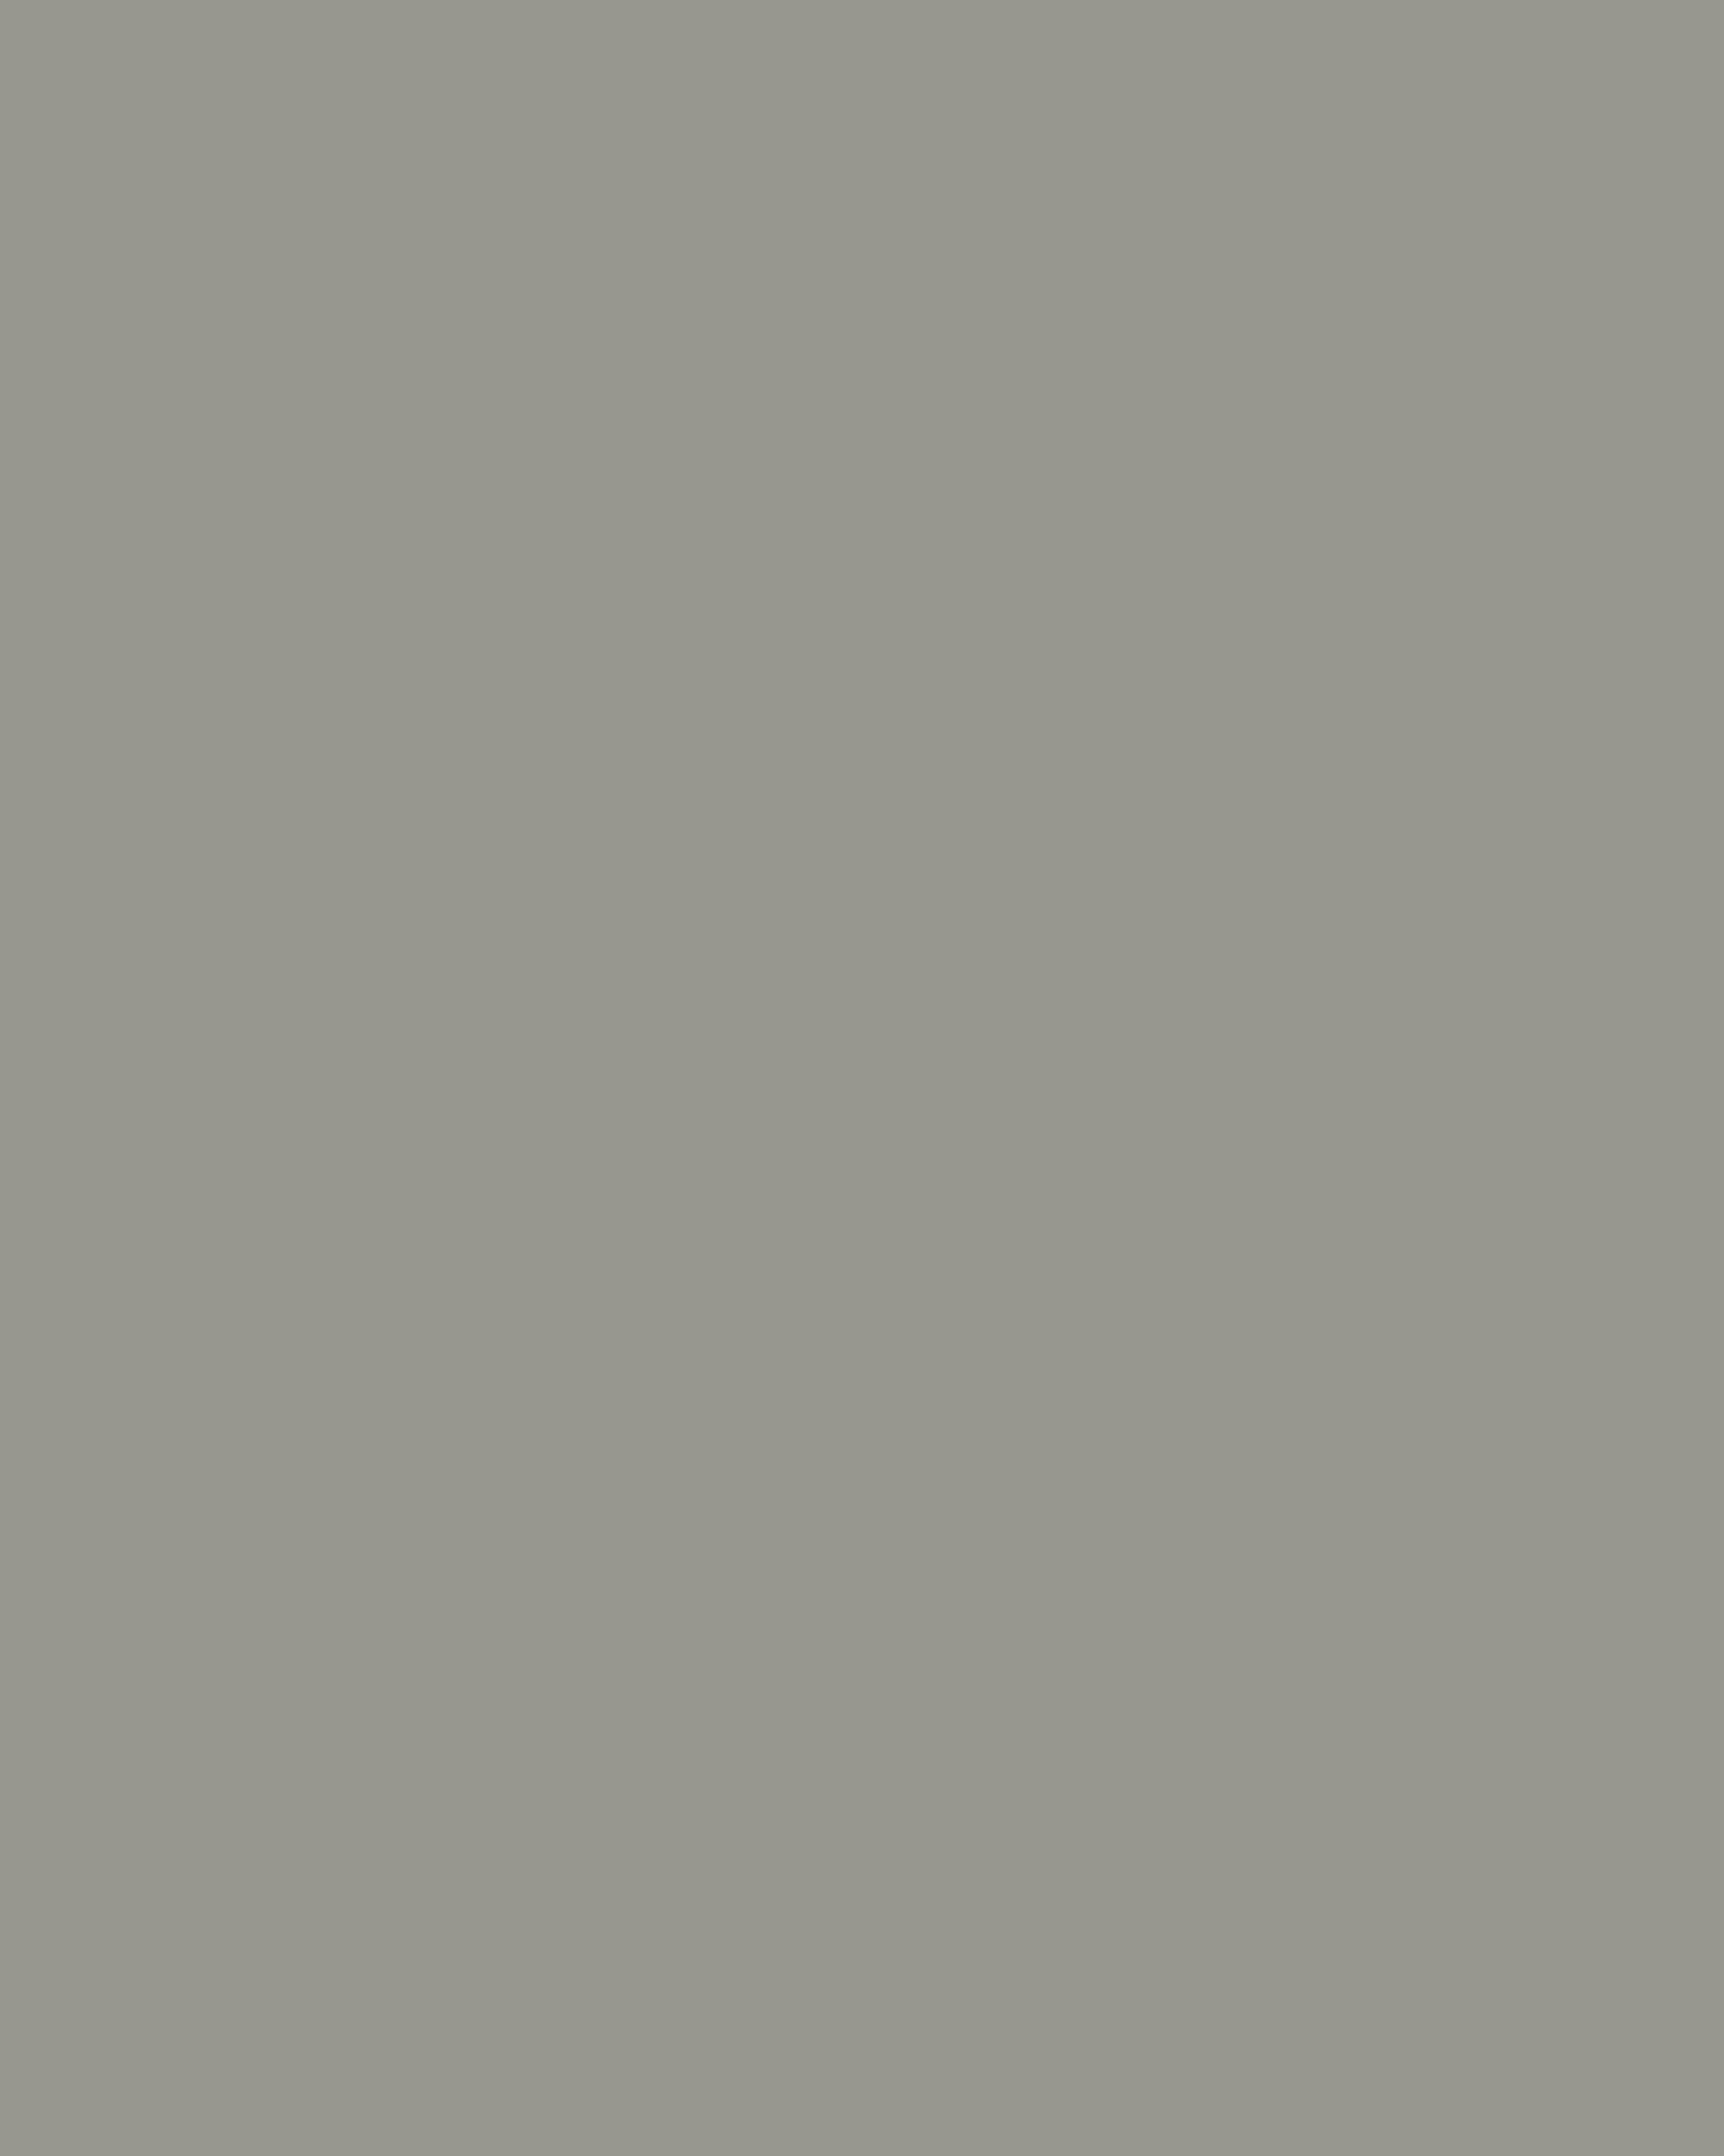 Исаак Левитан. После дождя. Плёс (фрагмент). 1889. Государственная Третьяковская галерея, Москва